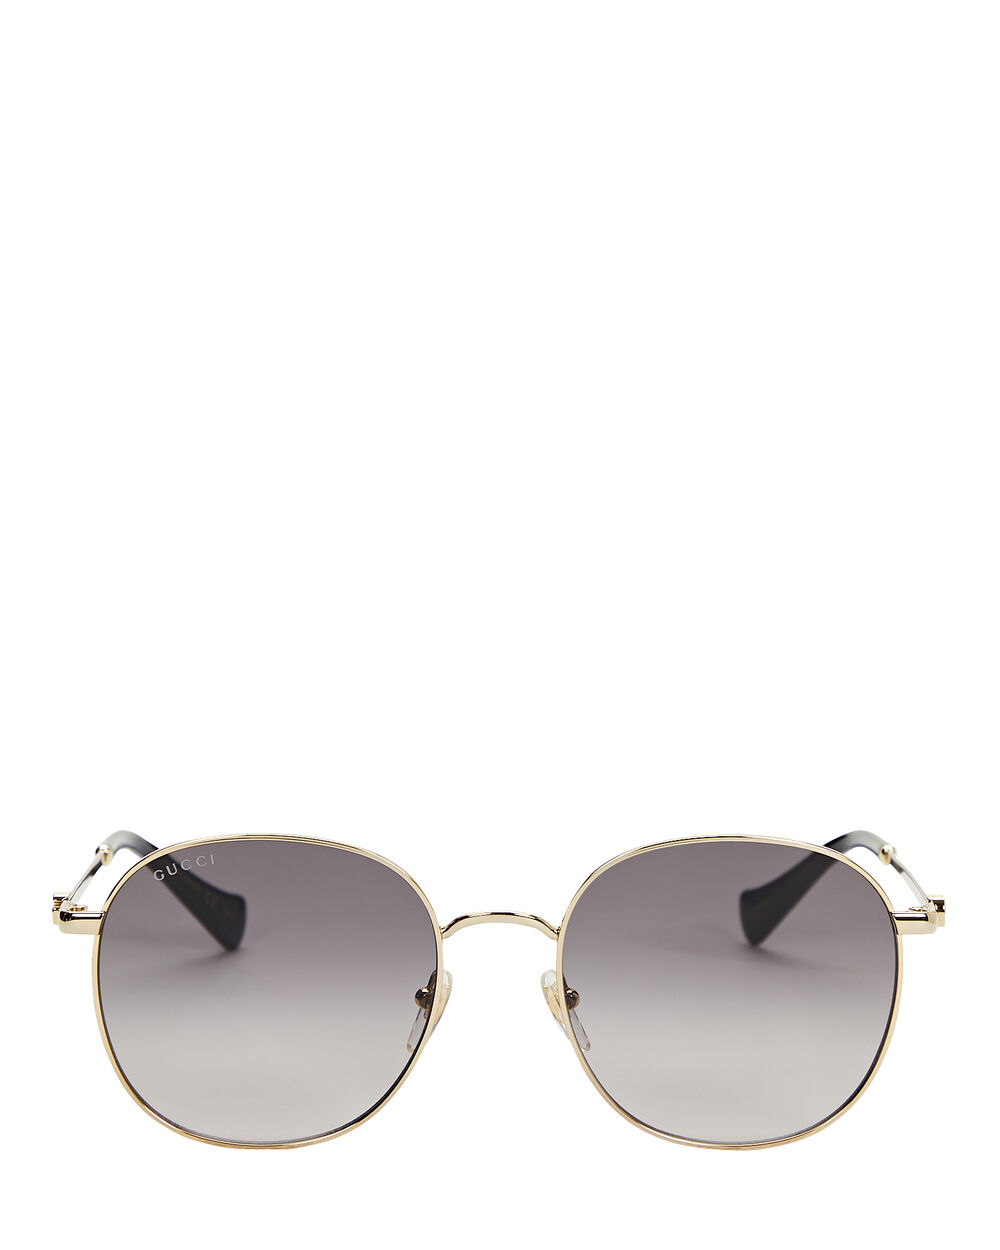 Gucci Tortoiseshell Round Sunglasses in Black